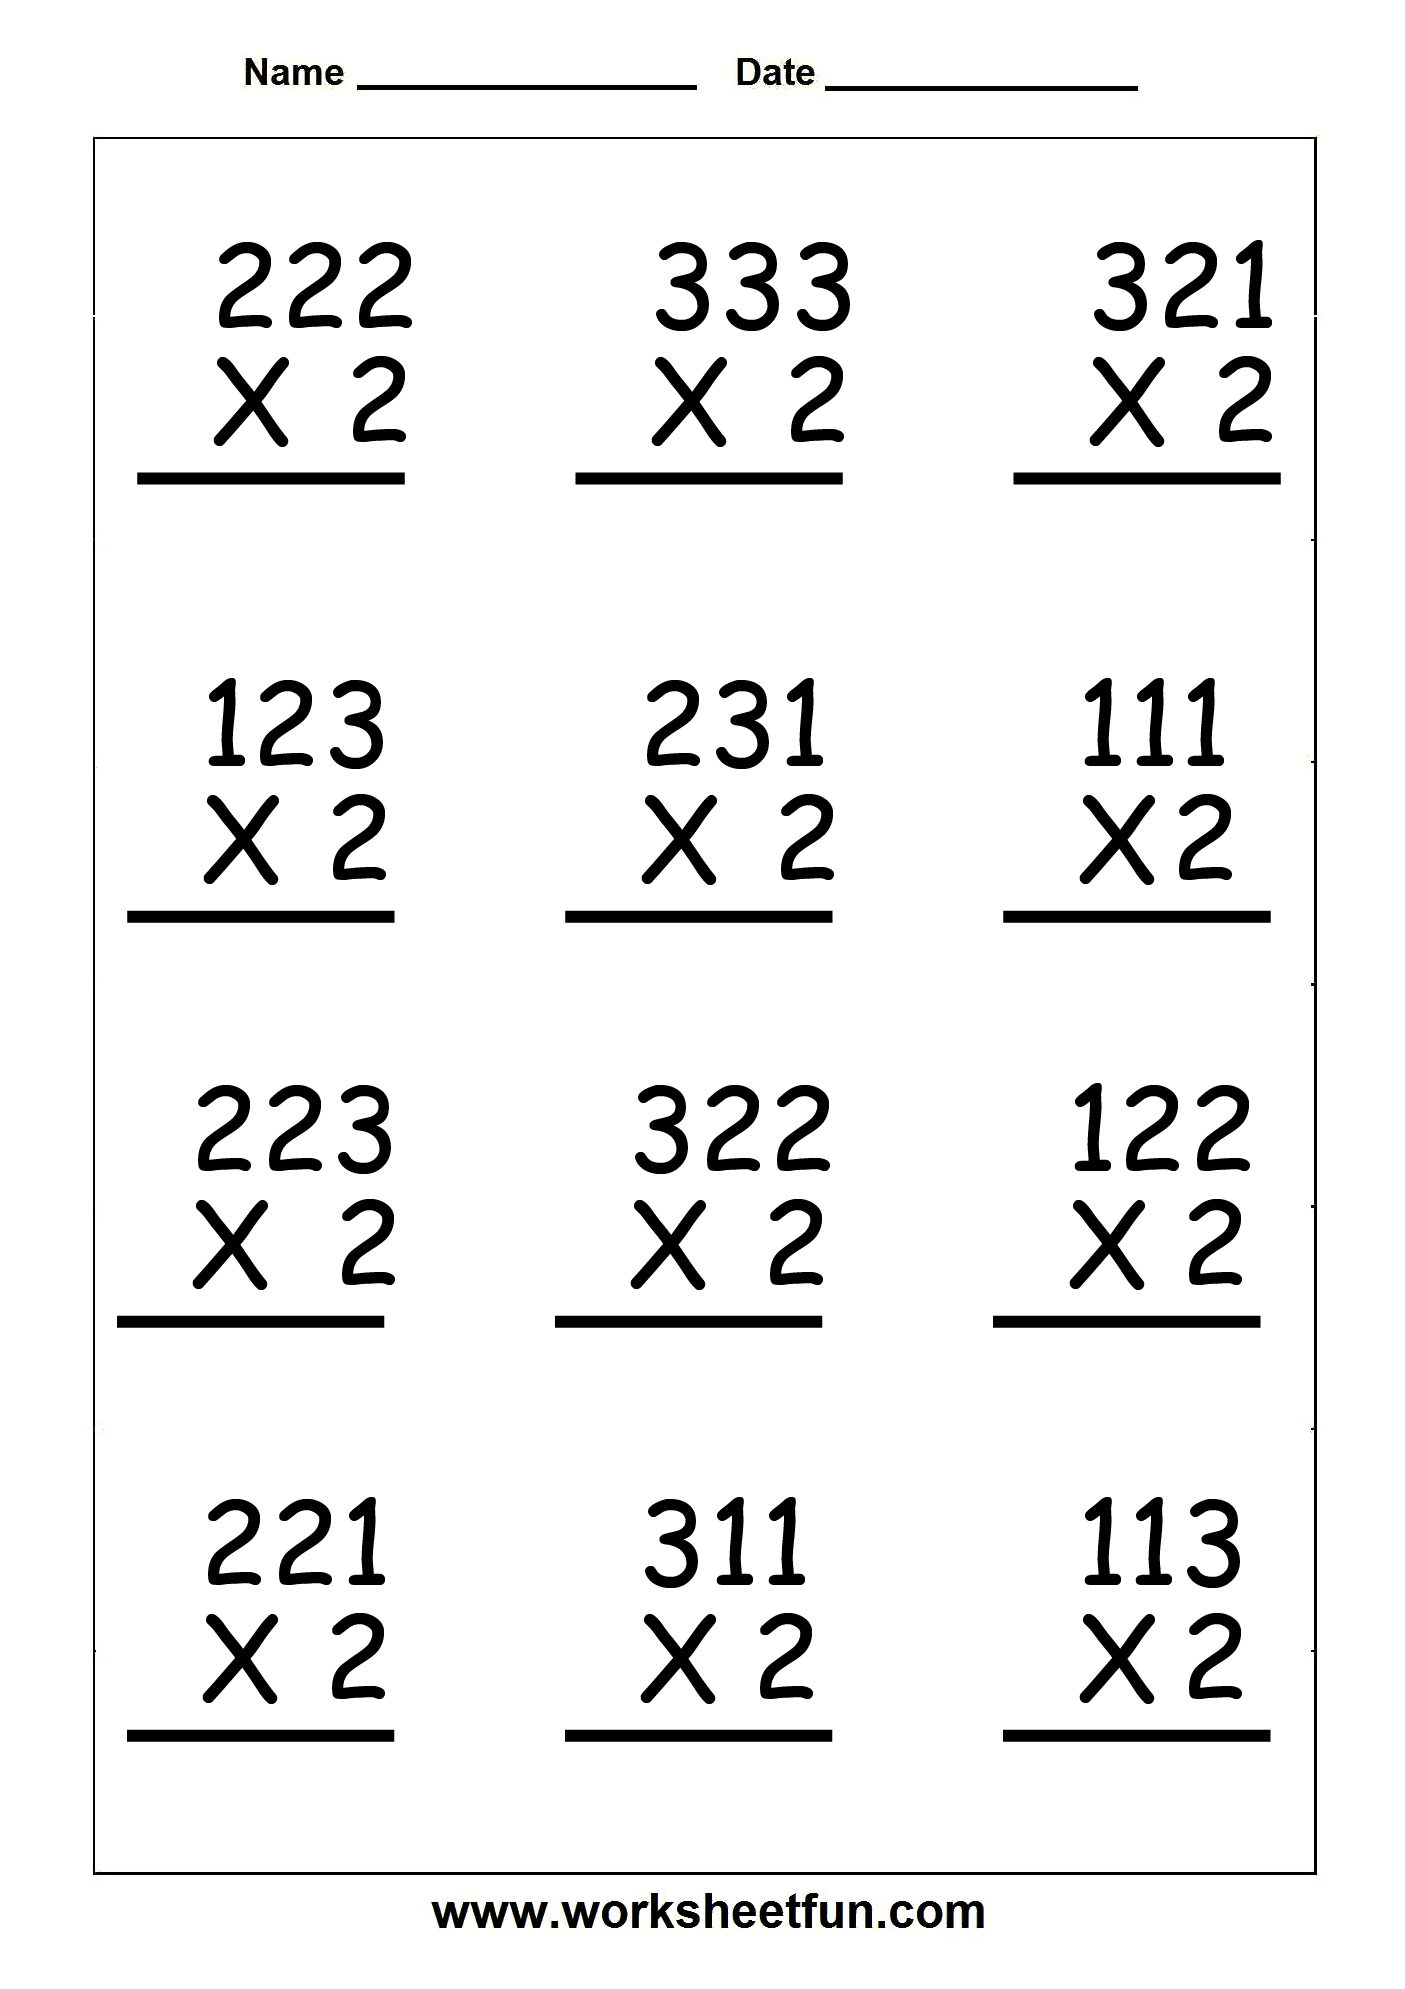  Multiplication Worksheets 3 Digit By 2 Digit PrintableMultiplication